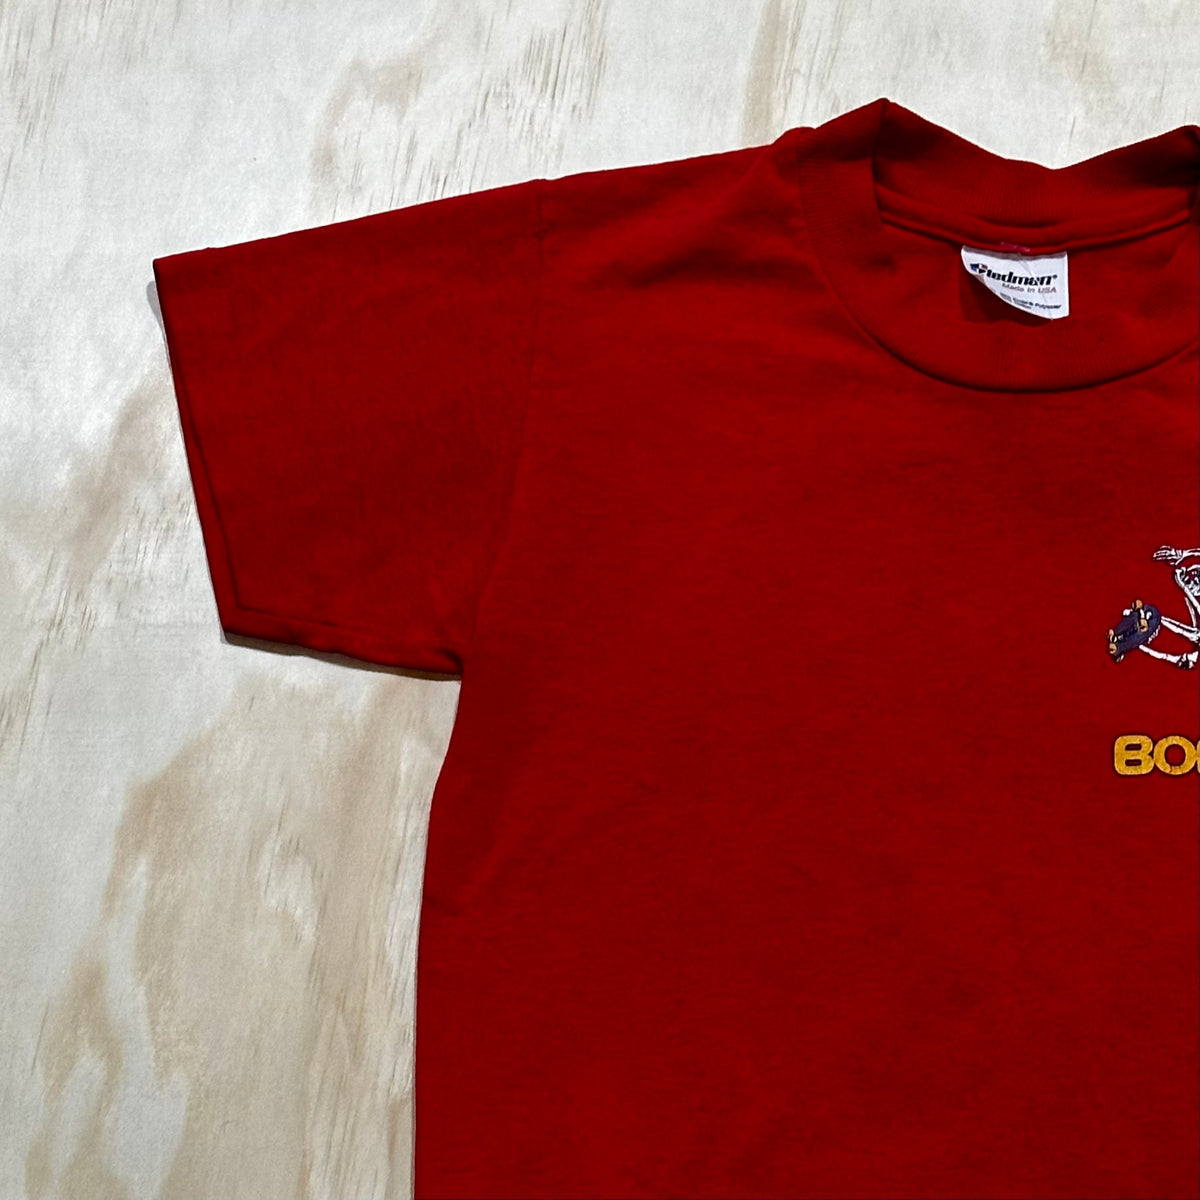 Vintage 90s Powell Peralta Skateboards skeleton red BONES KIDS t-shirt Youth